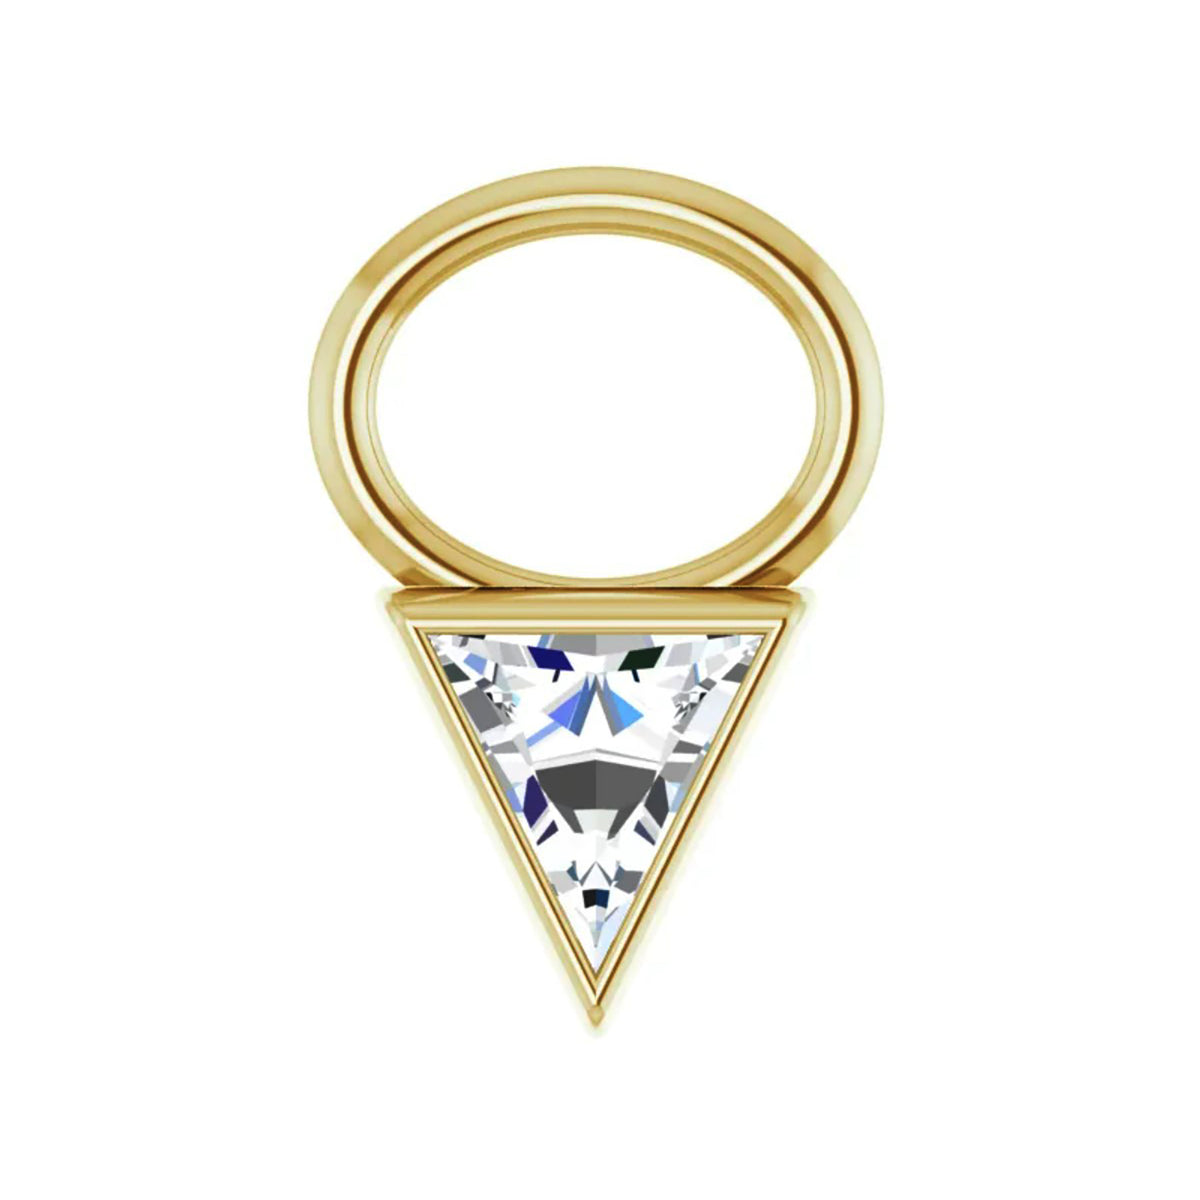 Petite Bezel Charm Huggie Earrings | Triangle Diamonds